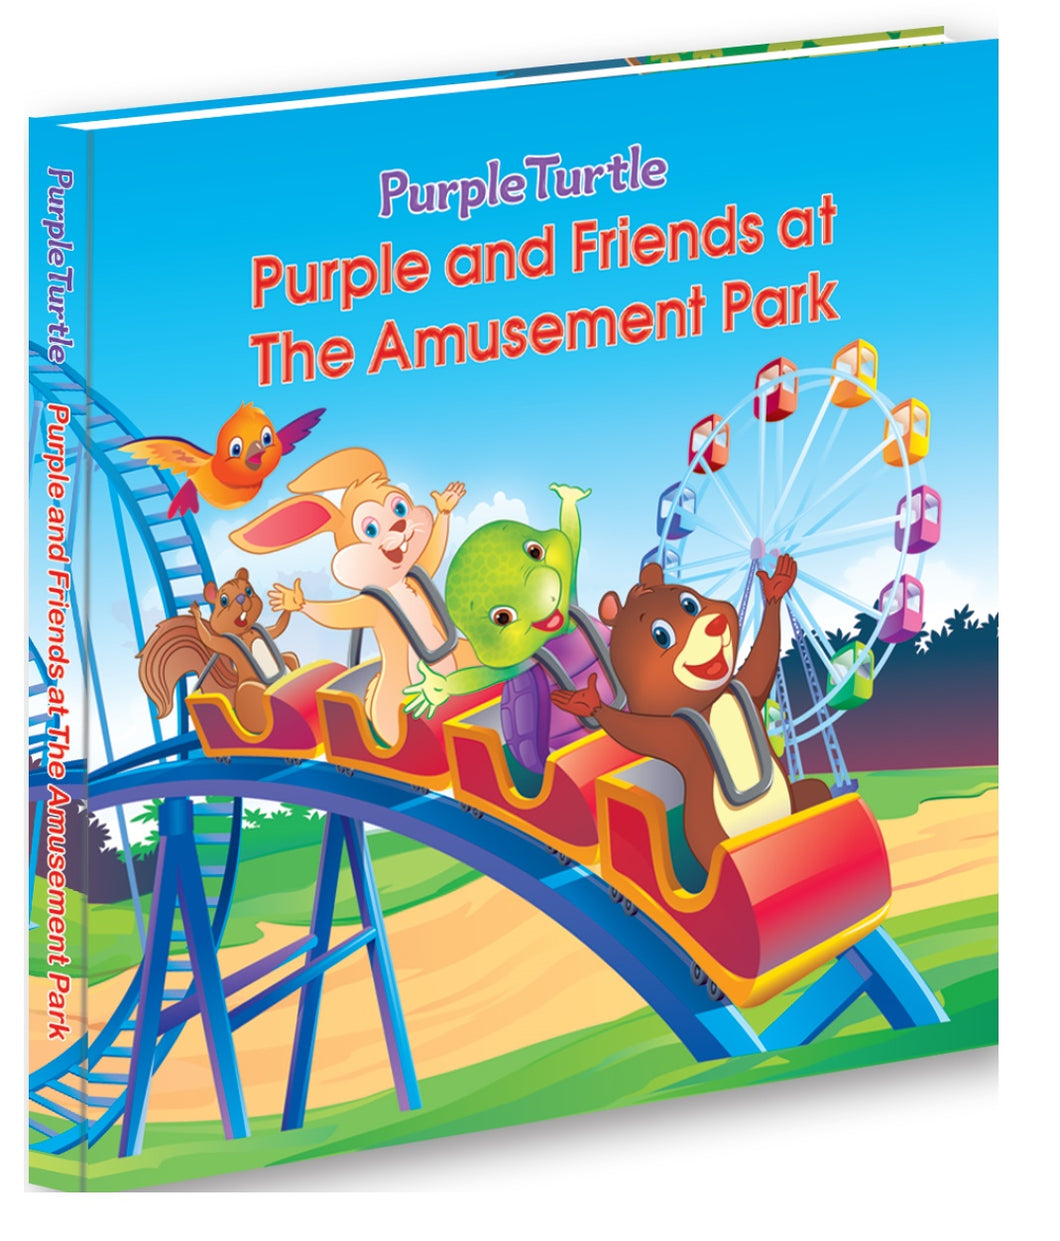 Purple and Friends at The Amusement Park (Purple Turtle)